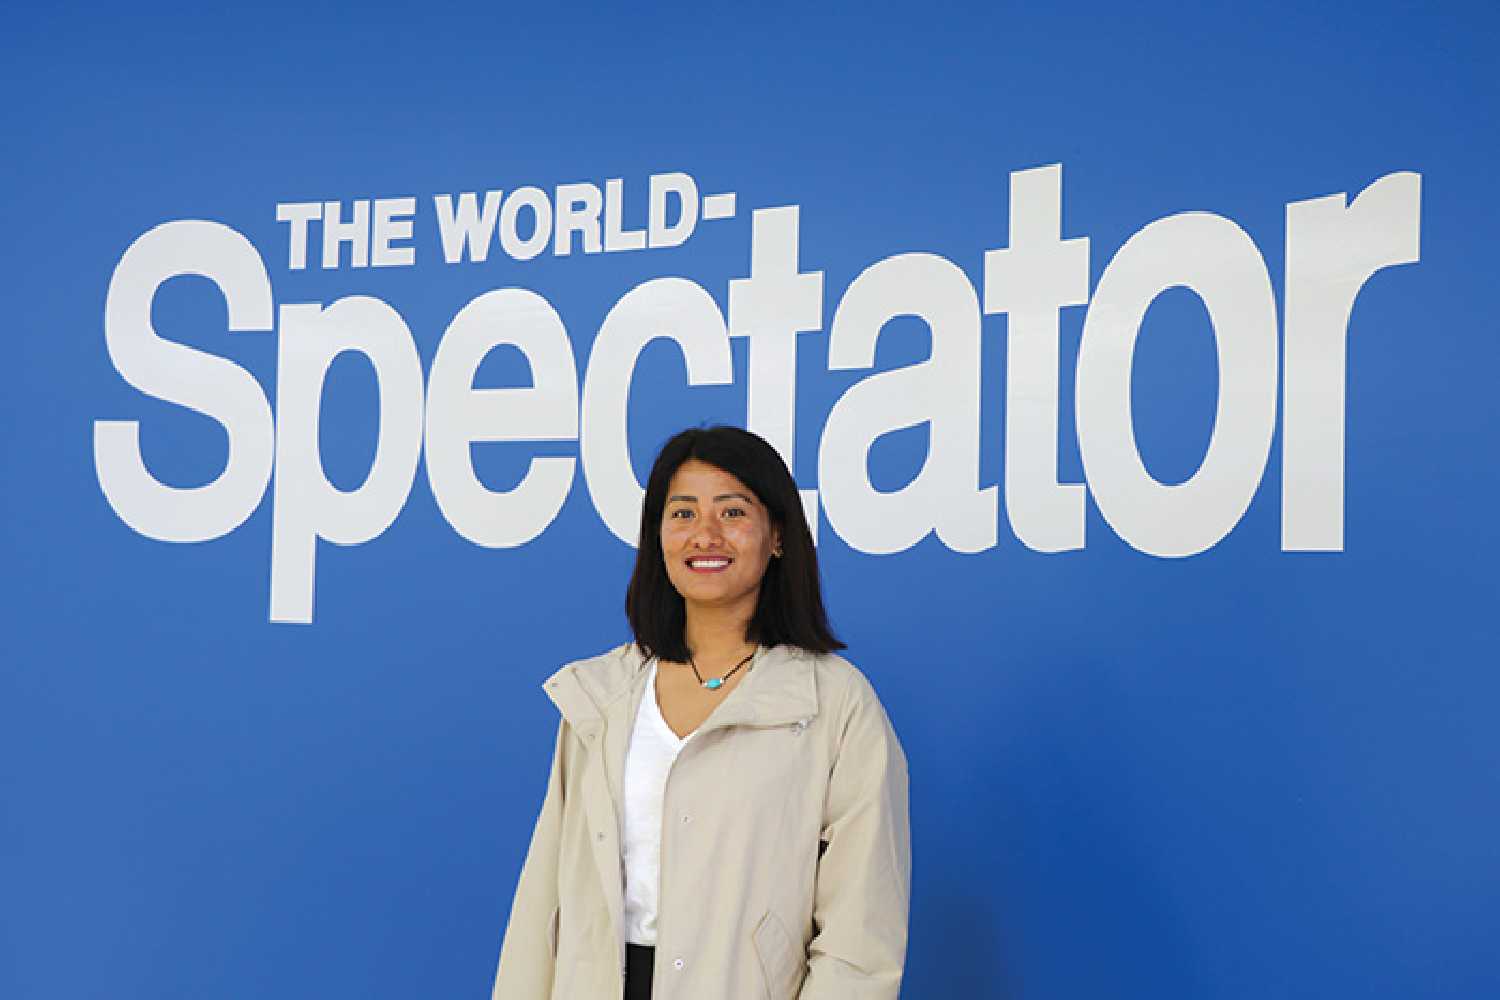 Nepali journalist Doma Sherpa visited the World-Spectator last week.